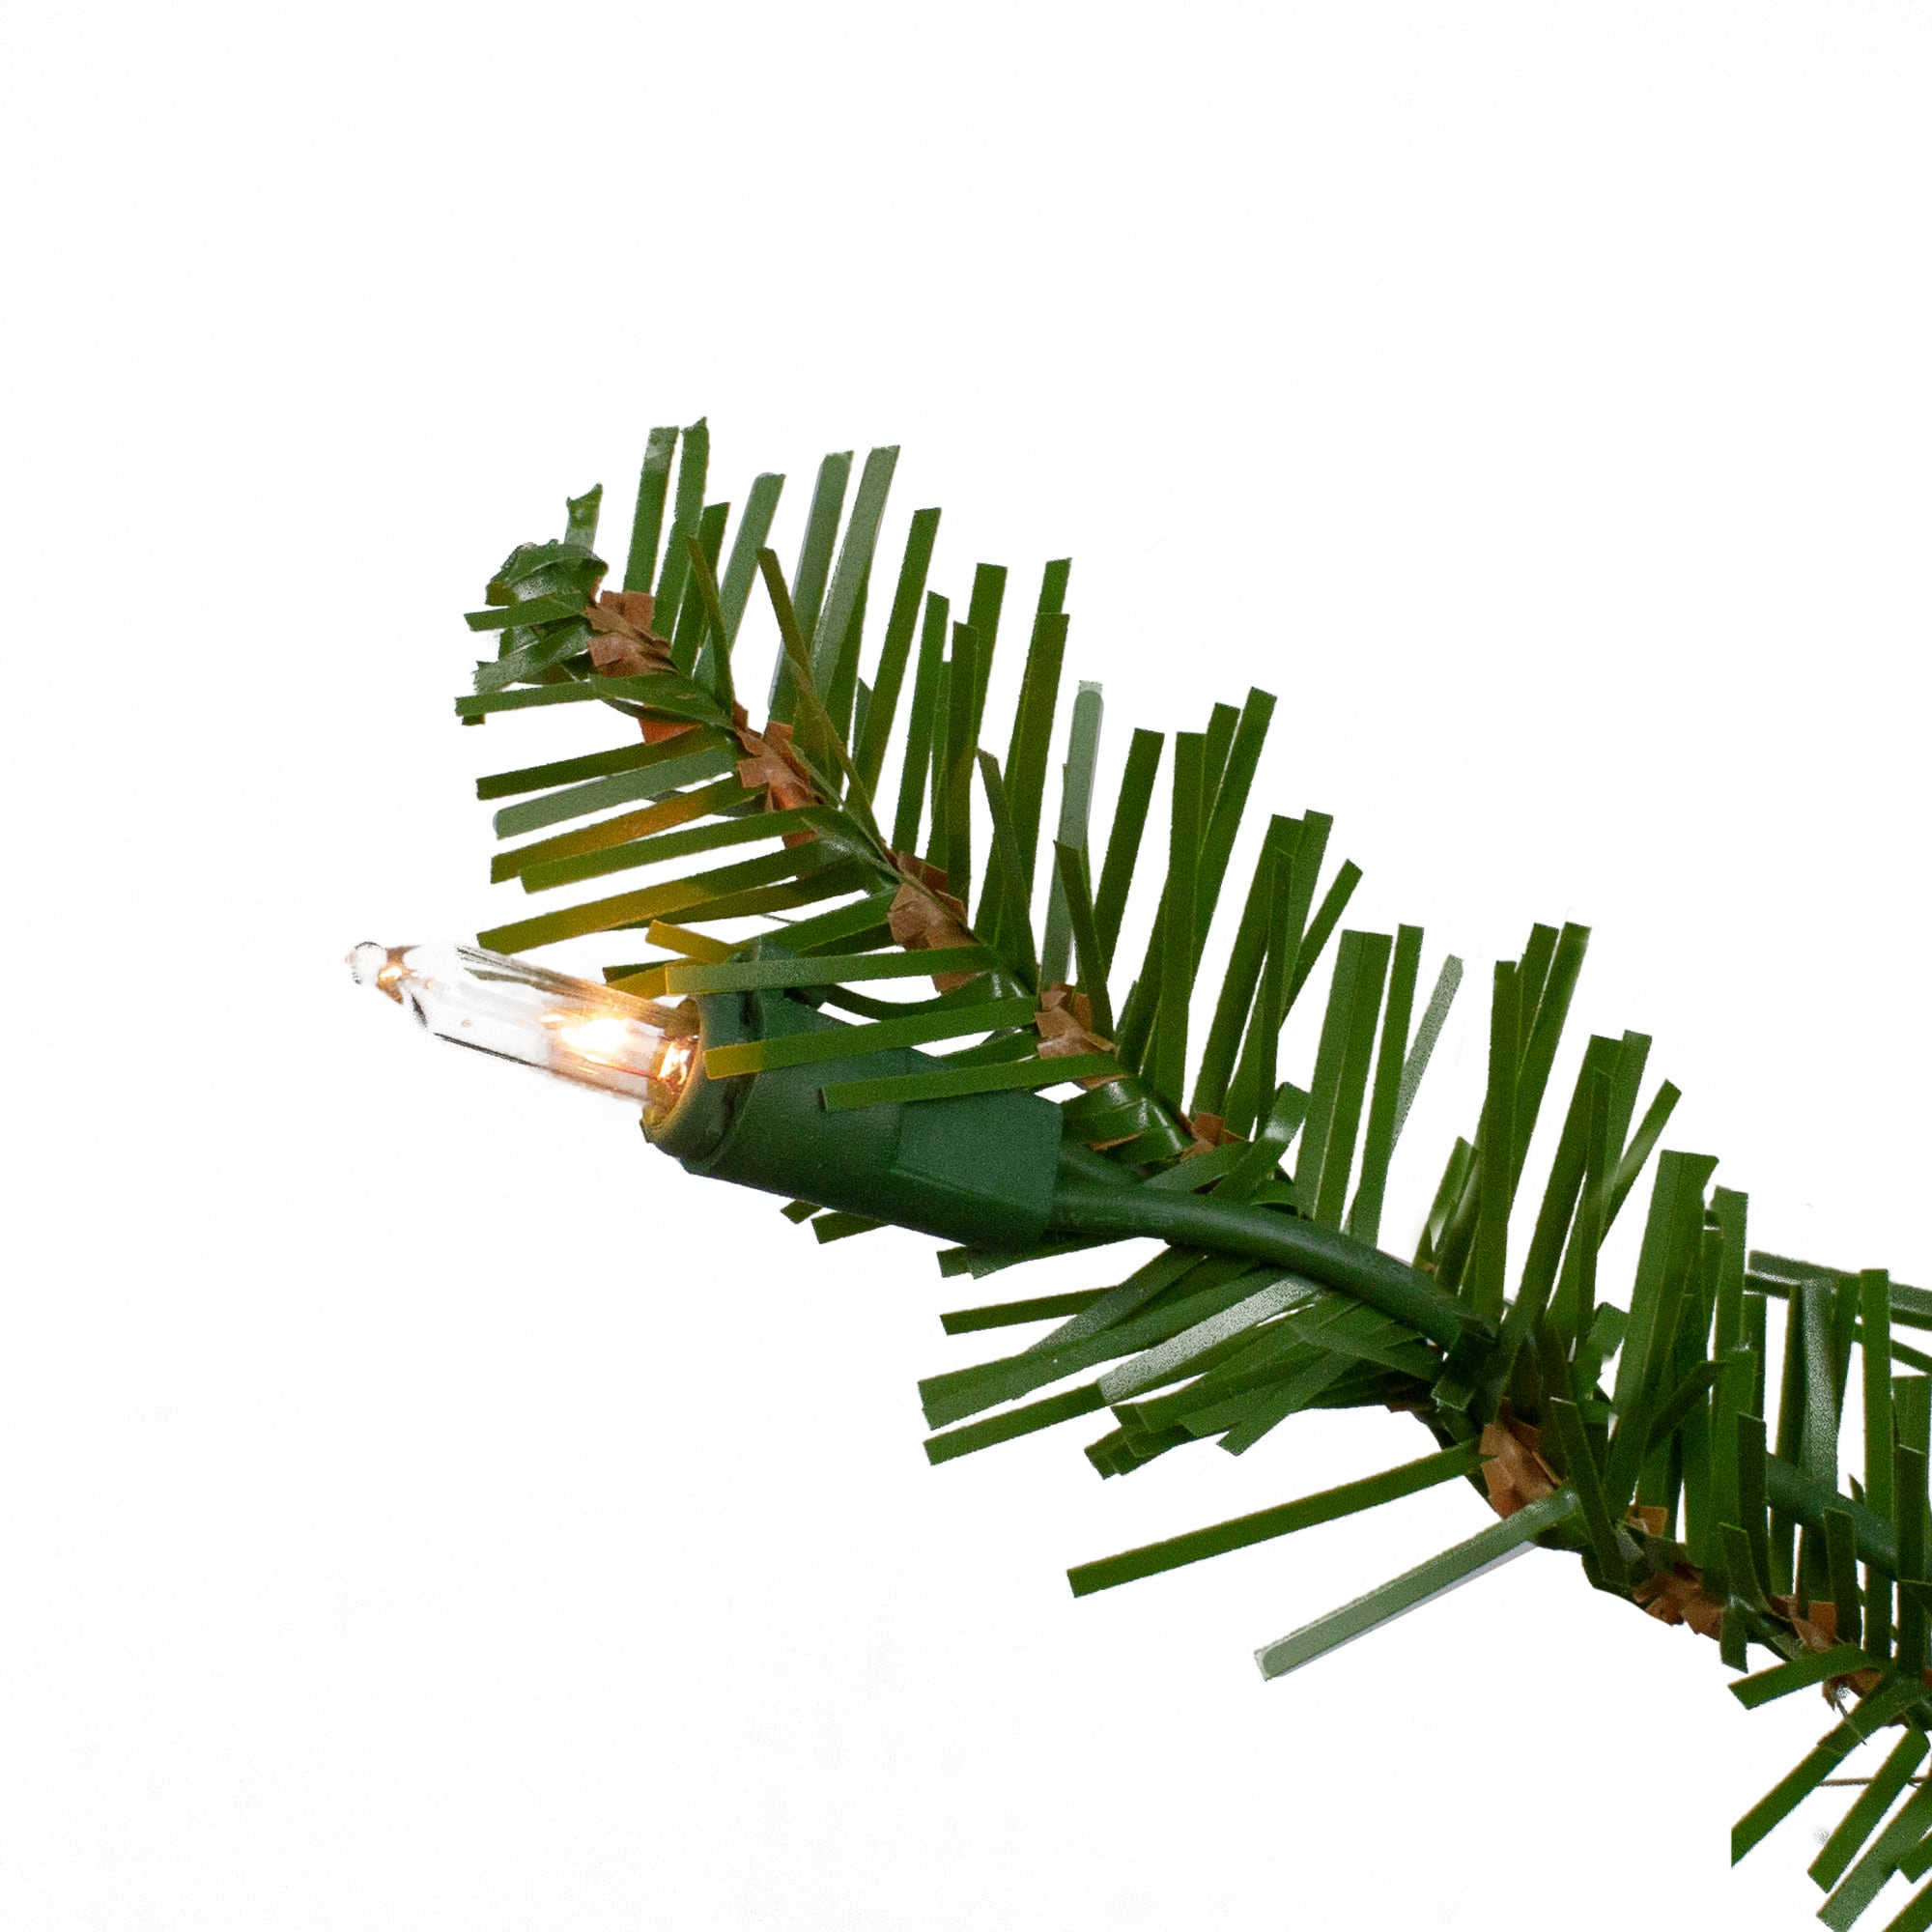 Pre-Lit Slim Alpine Artificial Christmas Tree Set, Clear Lights